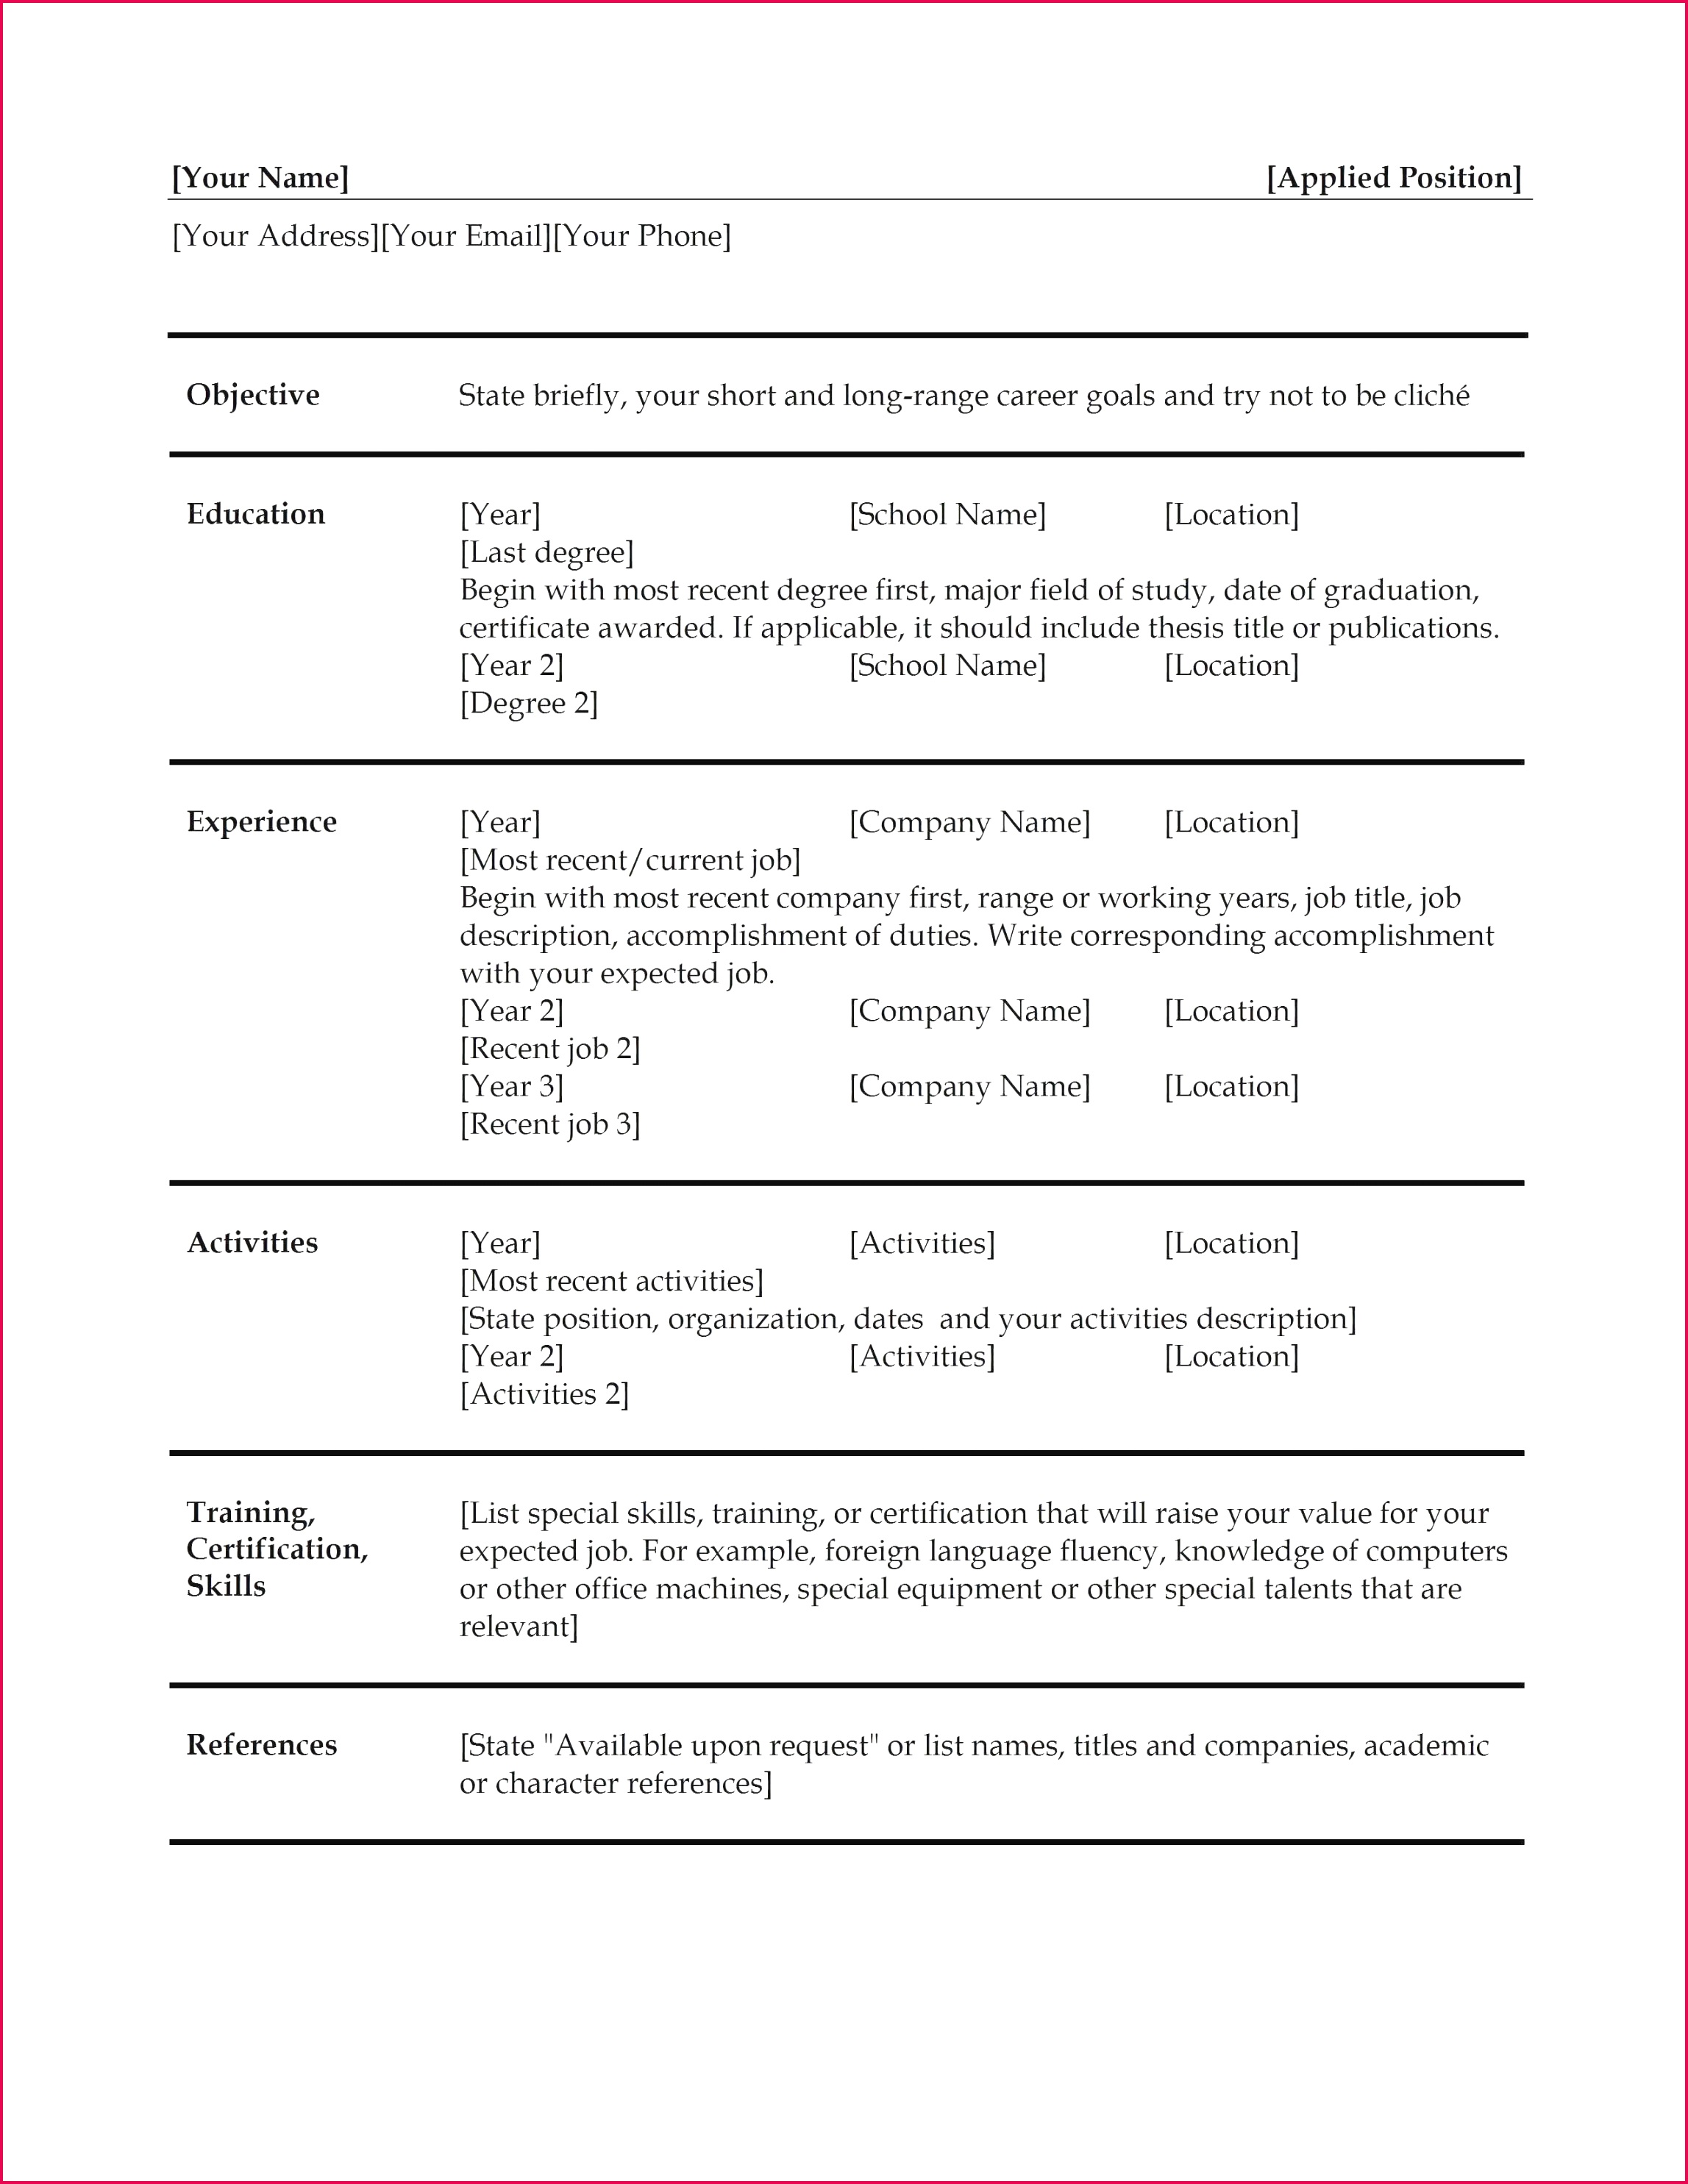 resumes ac plishments examples free best resume samples new resume examples pdf best resume pdf 0d image of resumes ac plishments examples